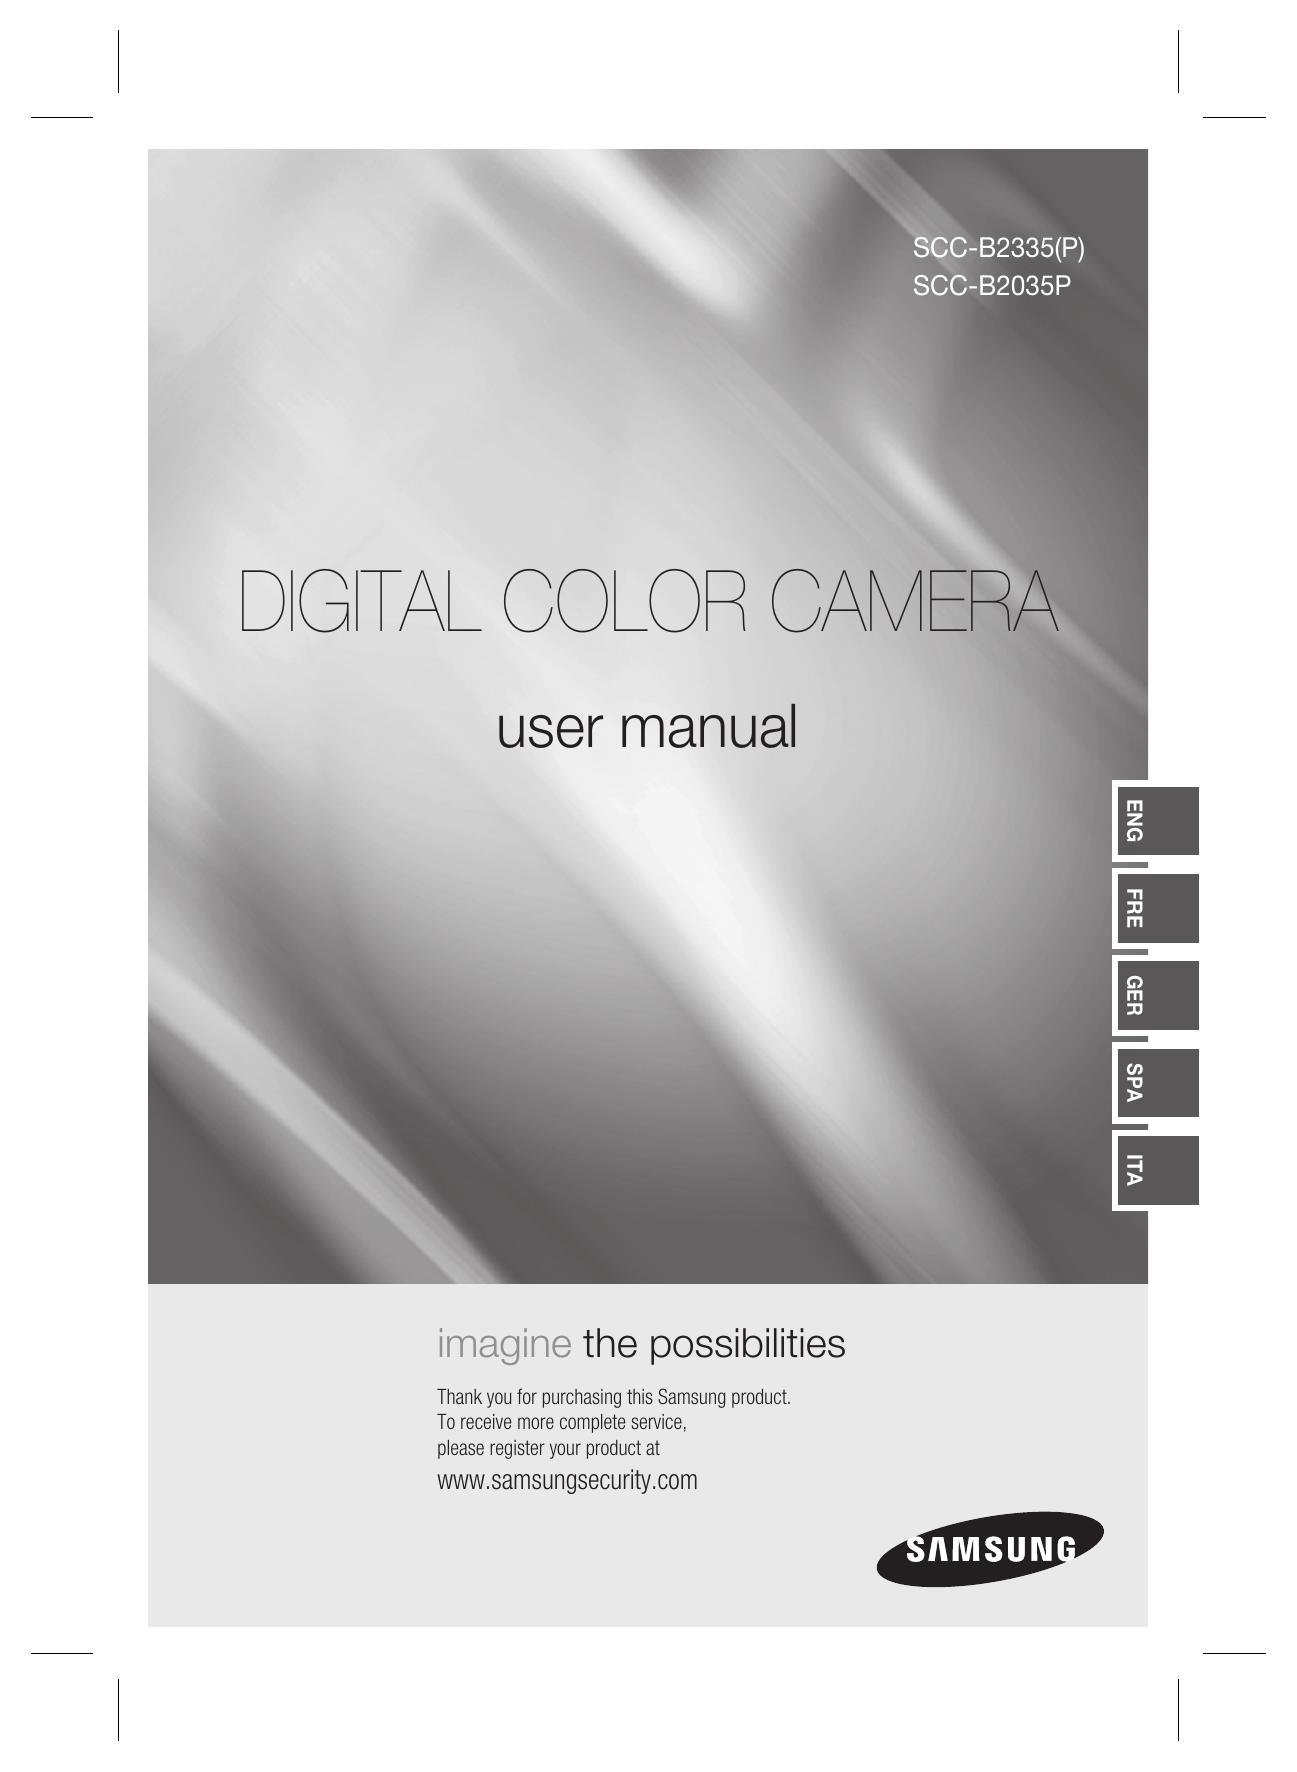 Samsung SCC-B2335P Security Camera User Manual